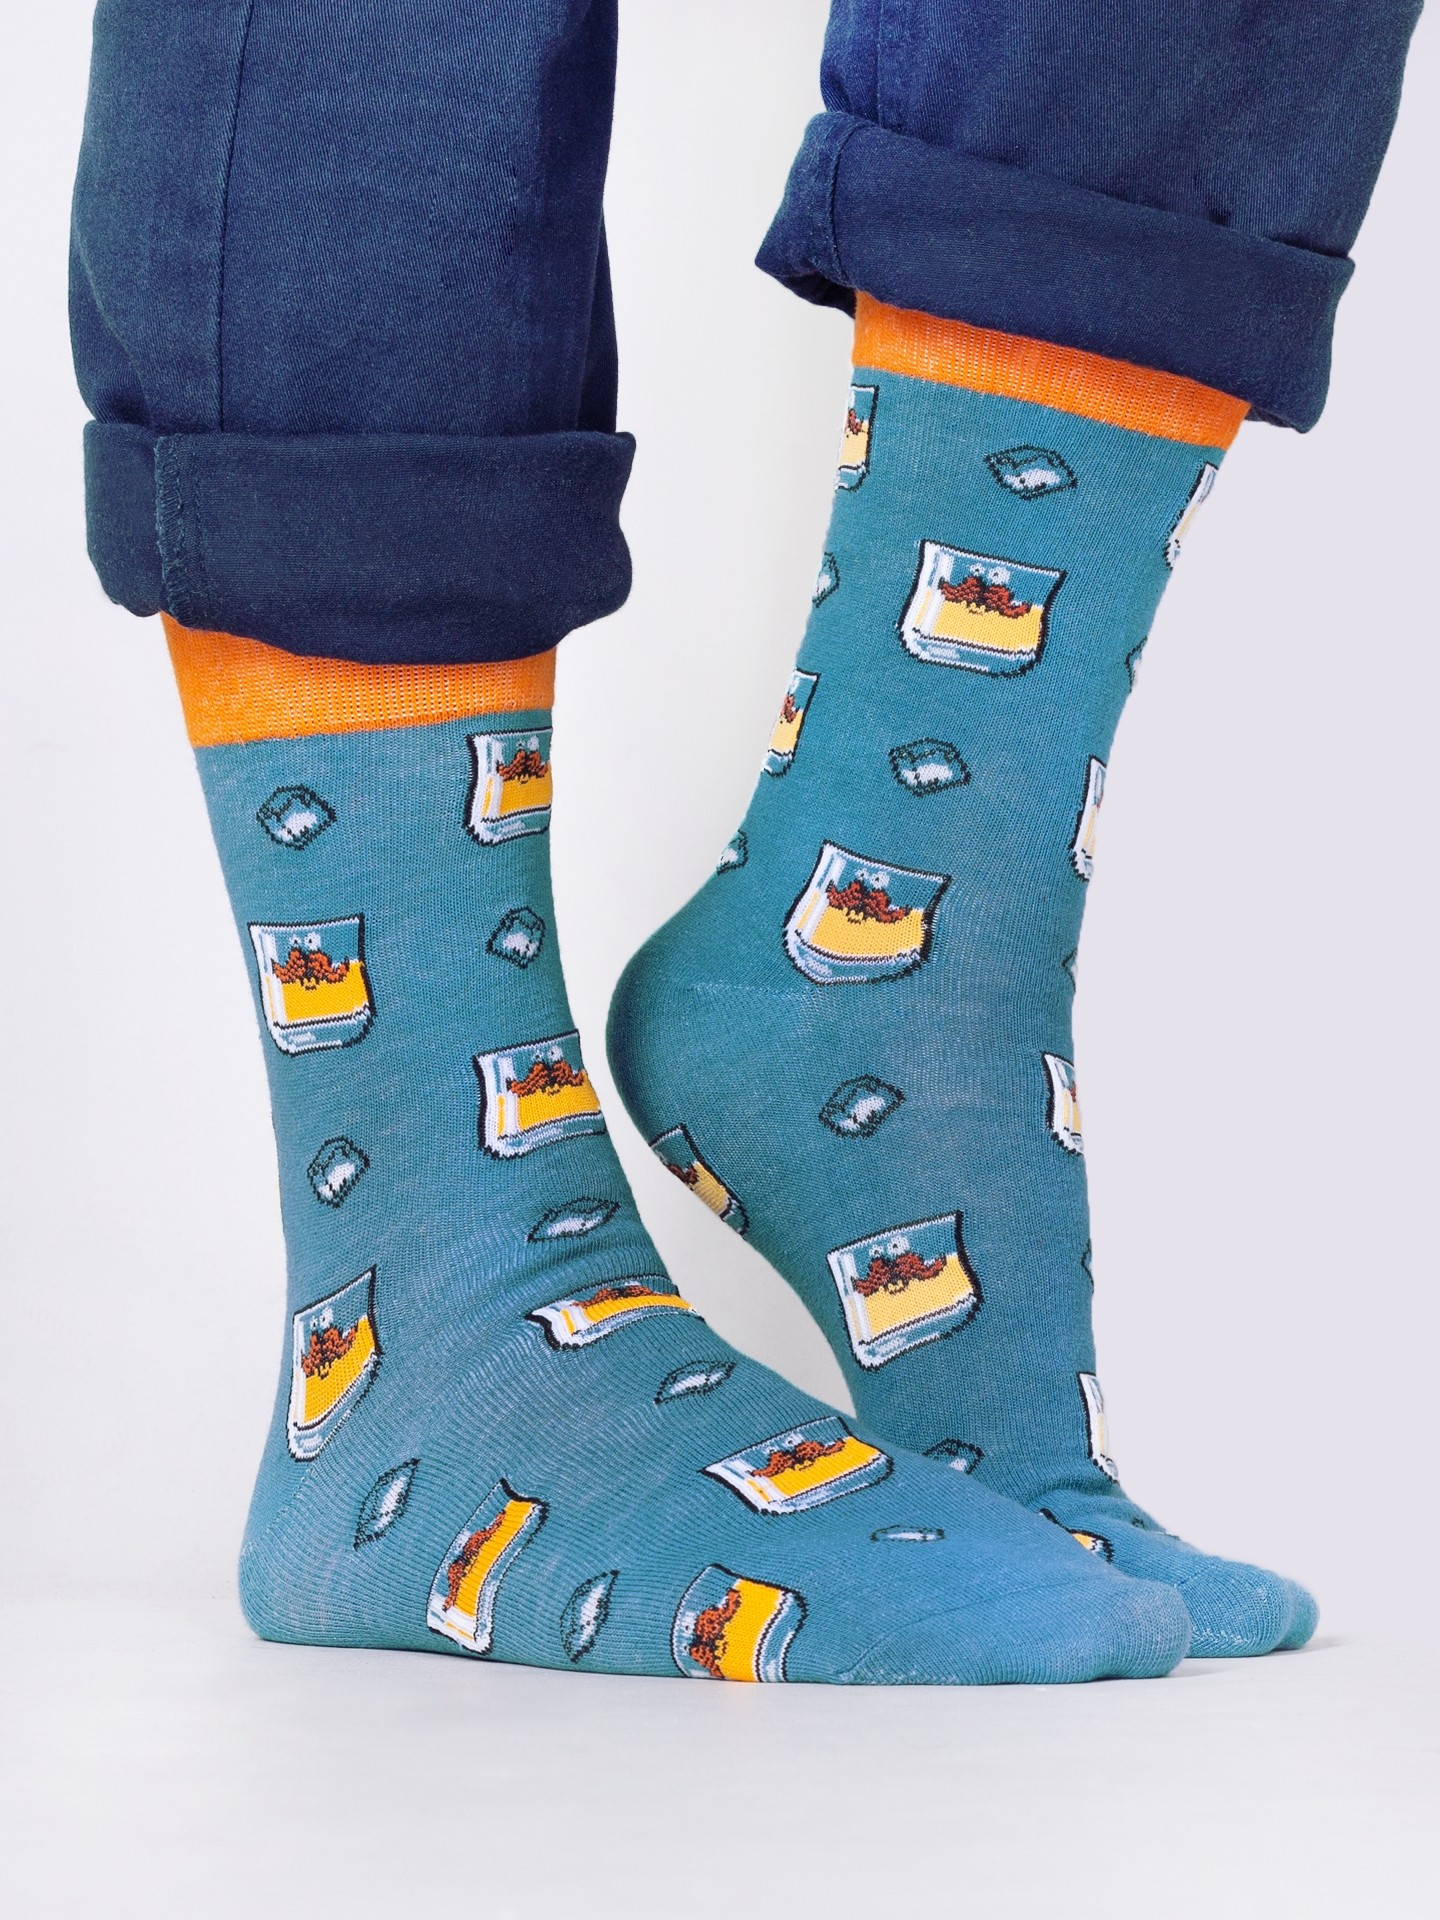 Yoclub Man's Cotton Socks Patterns Colors SKA-0054F-H600